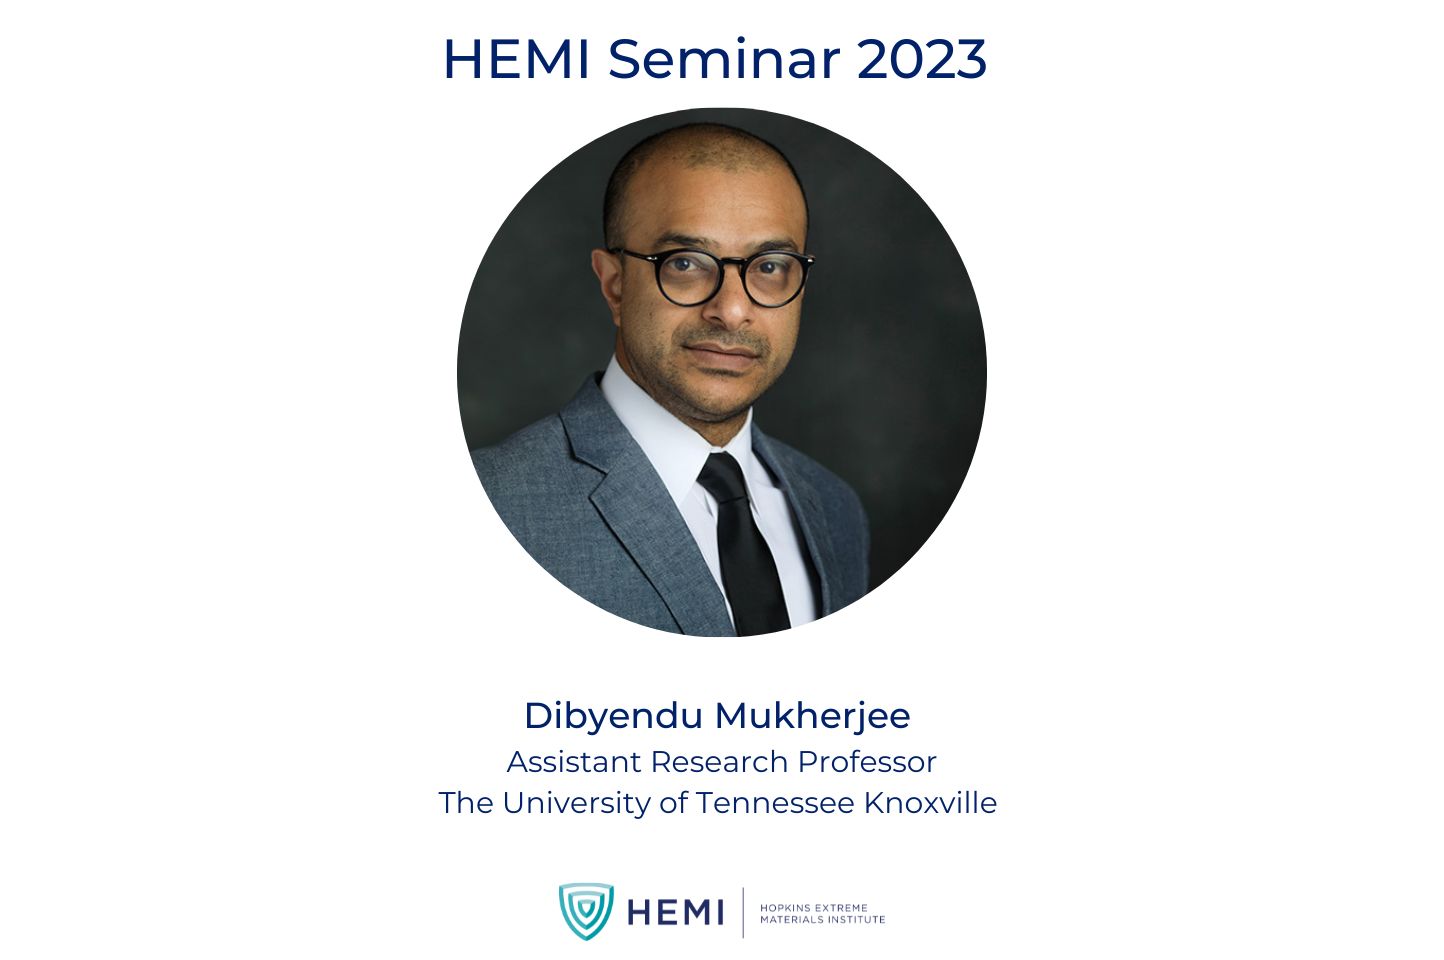 Dibyendu Mukherjee headshot and HEMI logo with text: "HEMI Seminar 2023, Dibyendu Mukherjee, Assistant Research Professor, The University of Tennessee Knoxville"